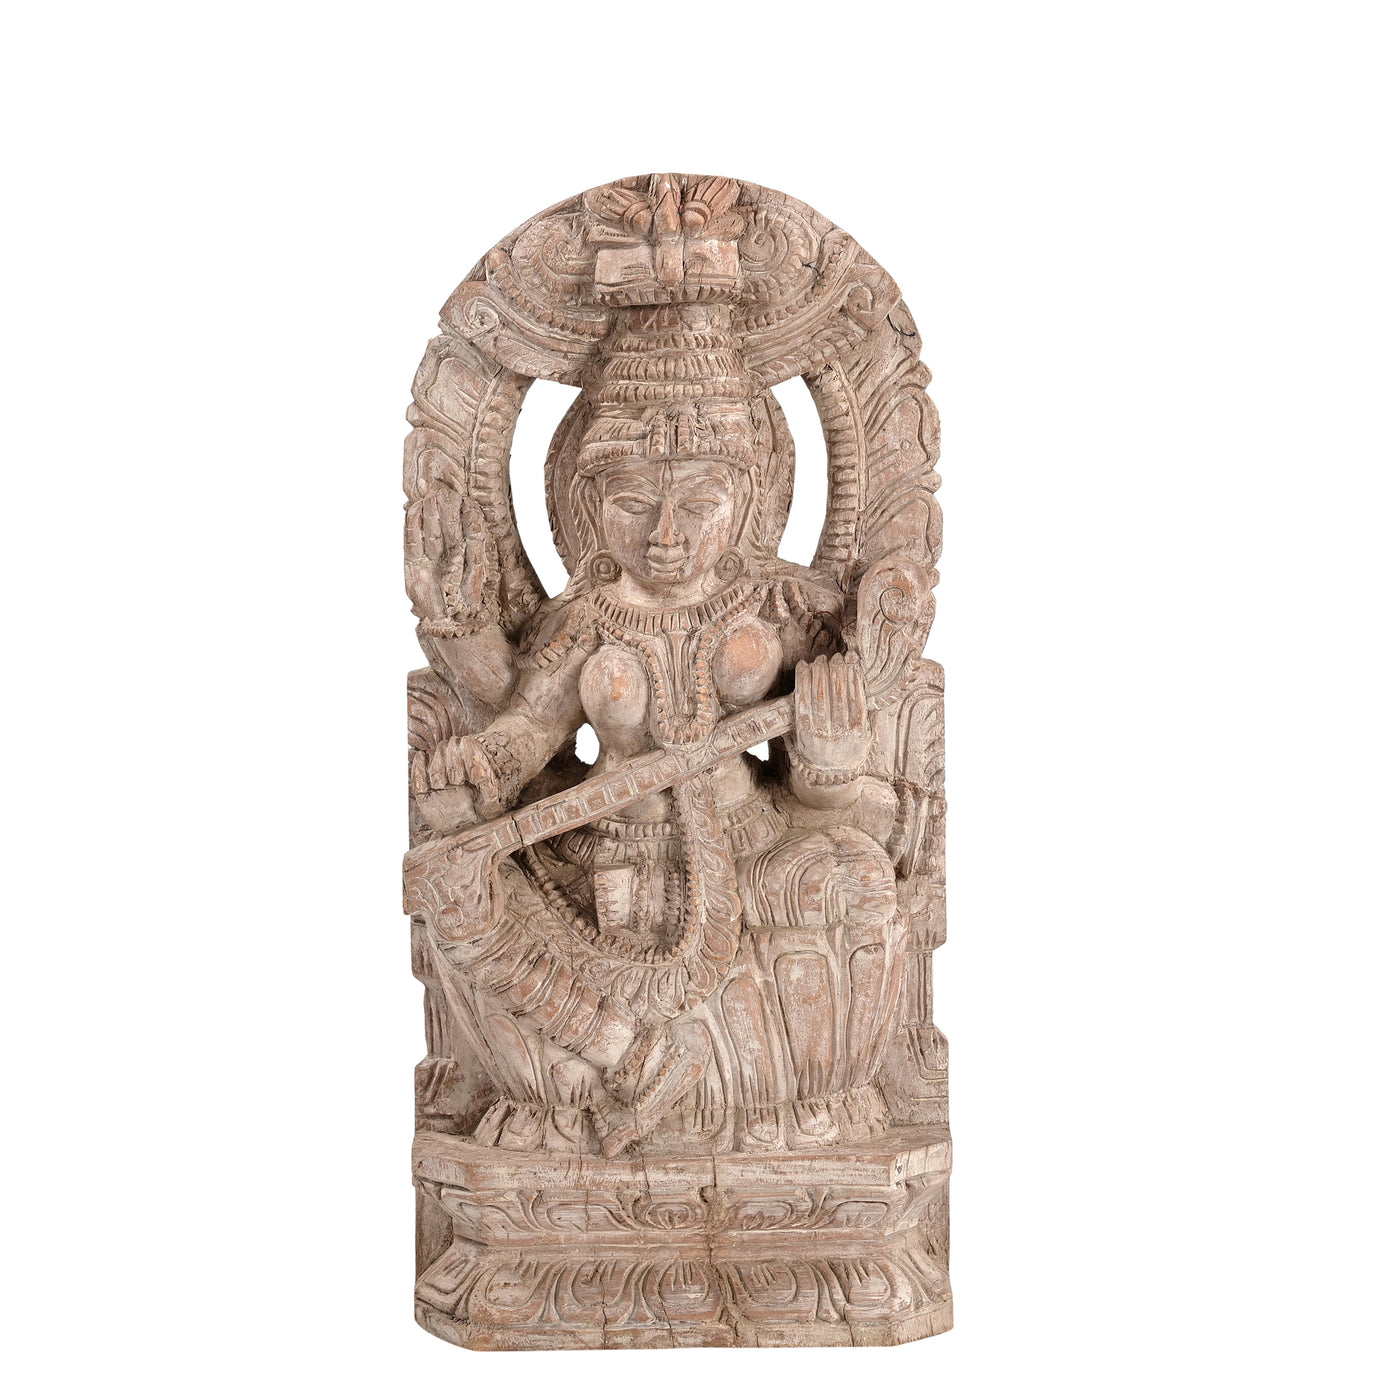 Devanamari - Statue of wooden saraswati n ° 1